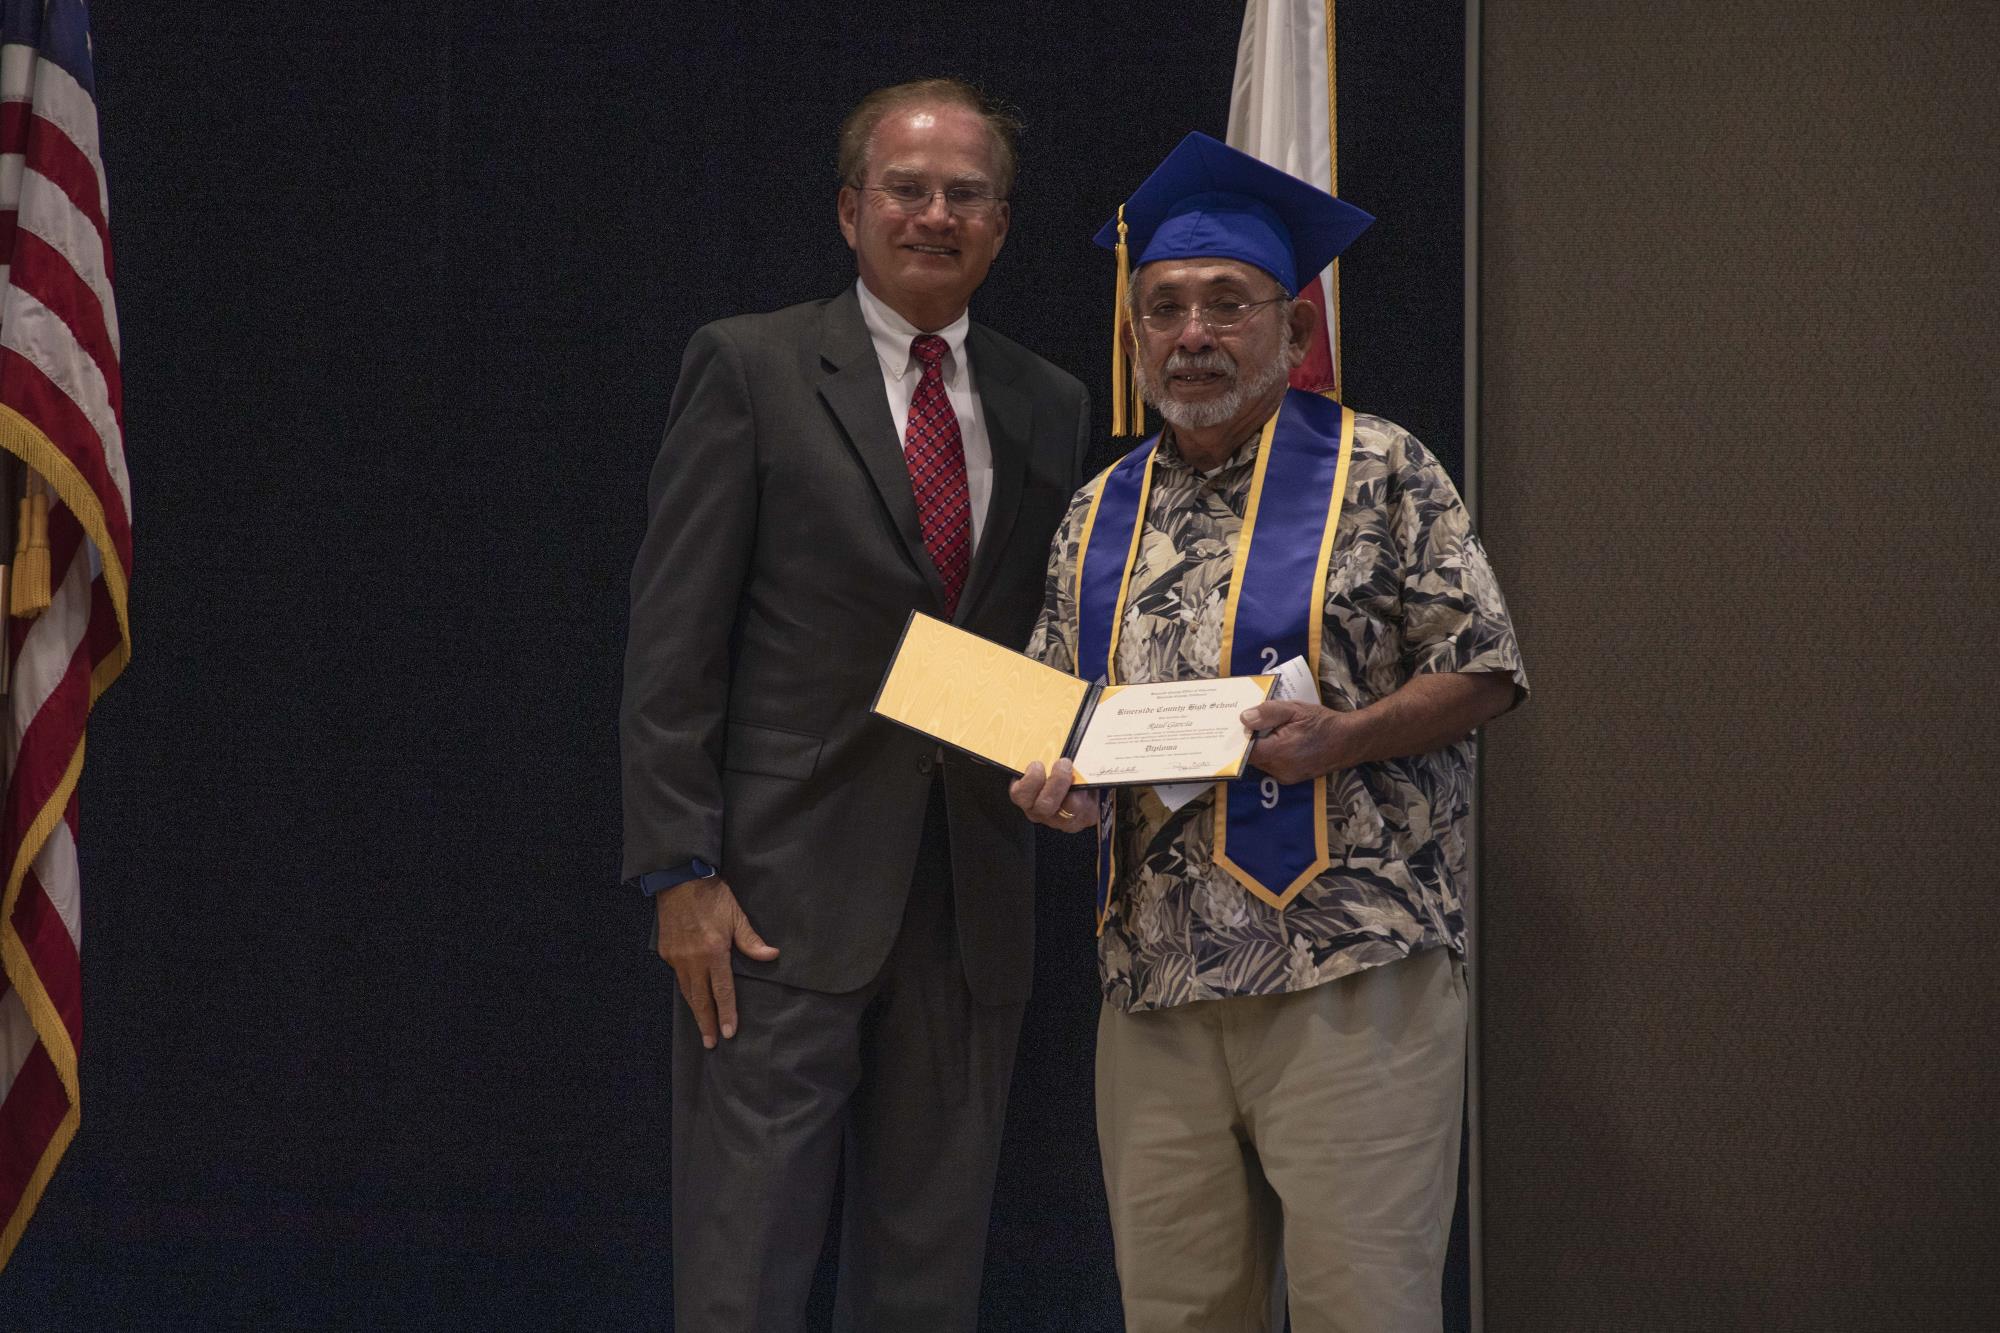 Raul Garcia receives his diploma